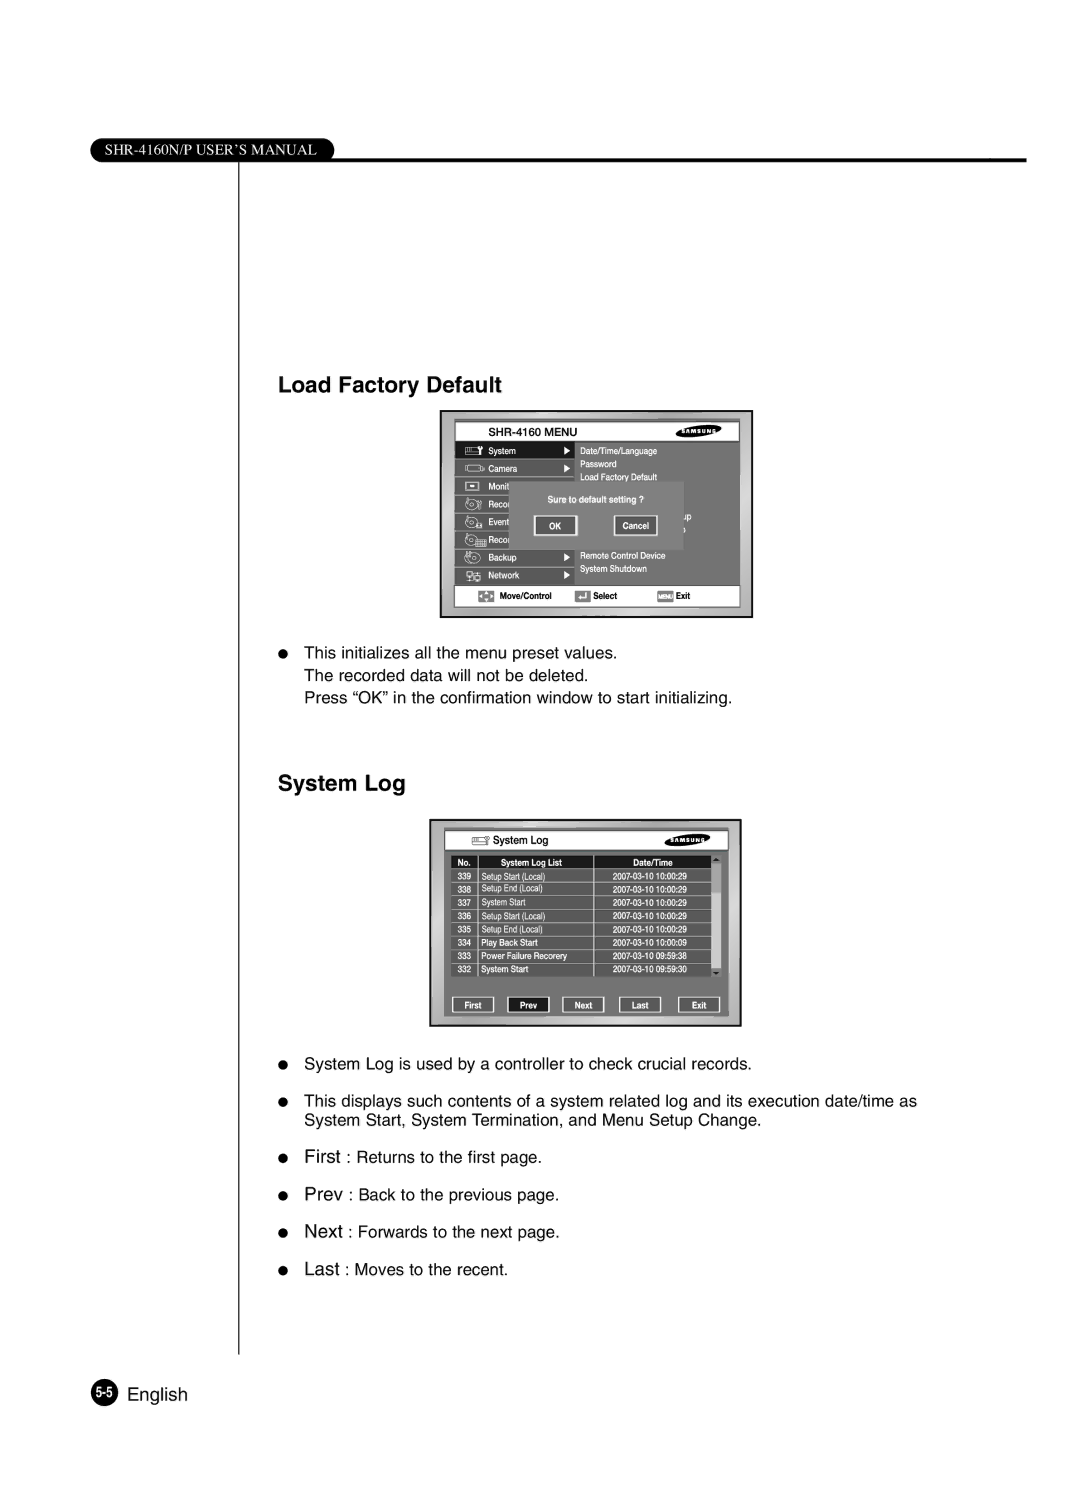 Samsung SHR-4160P manual Load Factory Default, System Log, 5English 